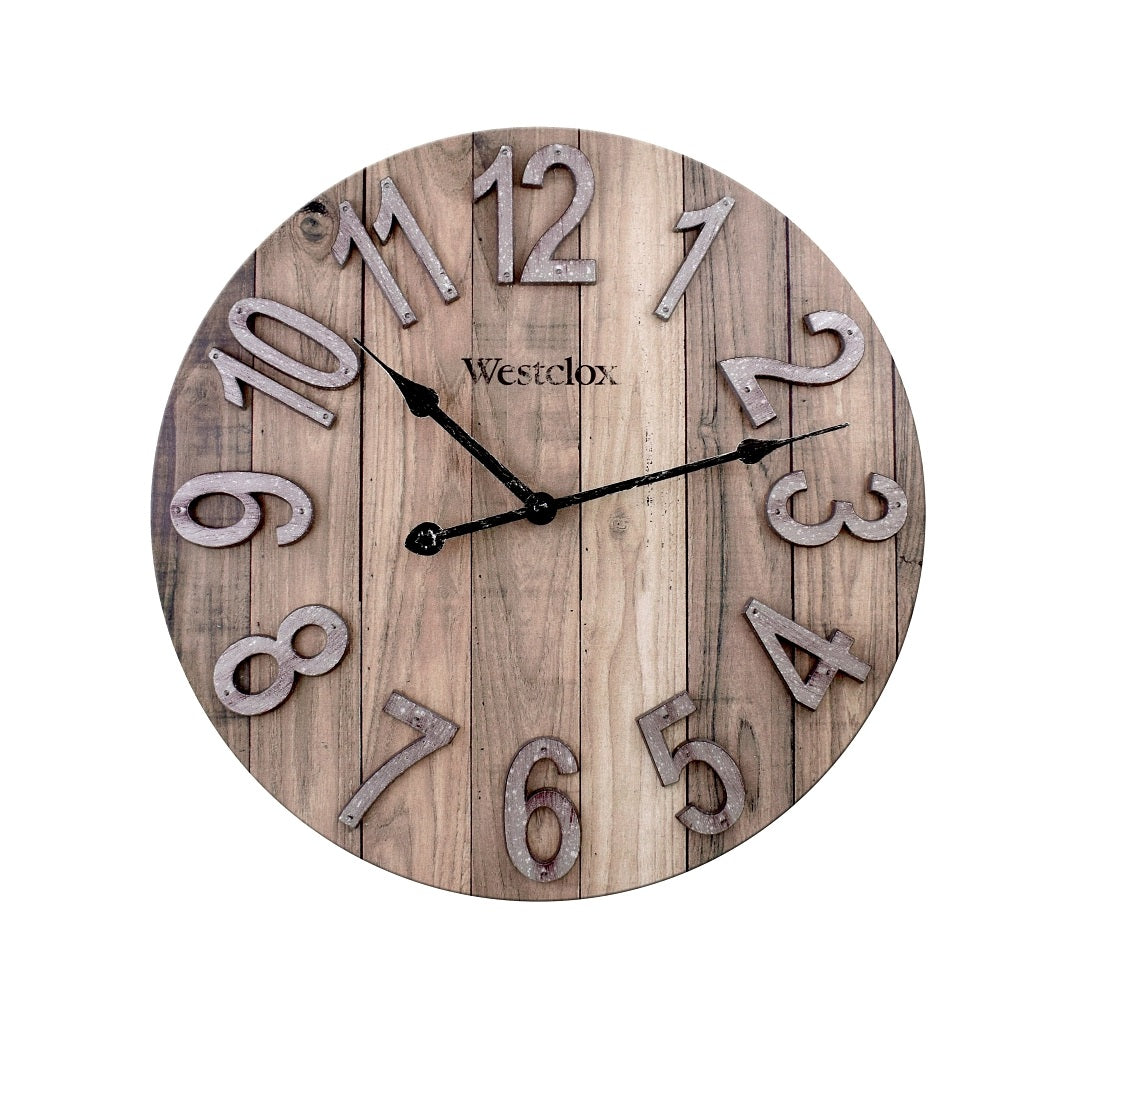 Westclox 38070 Analog Wall Clock, Brown Frame